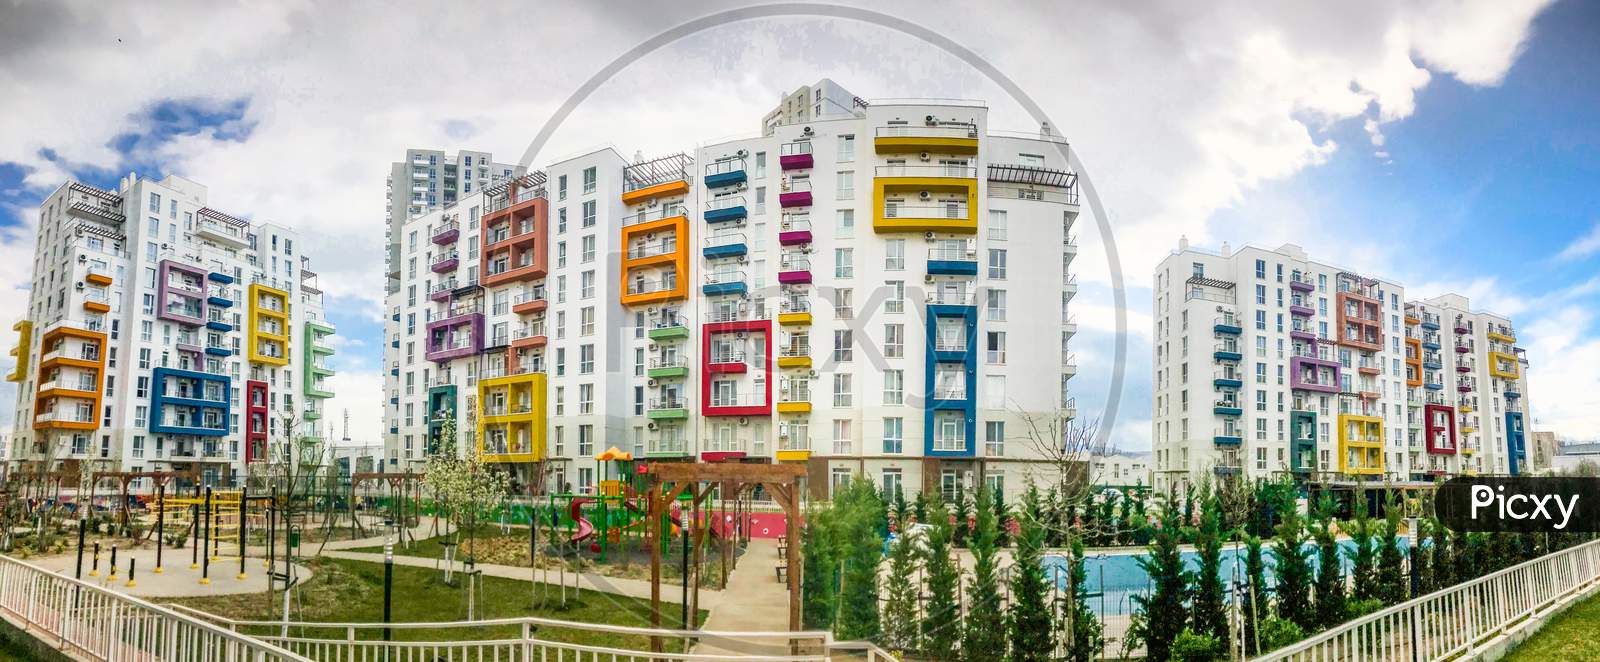 Green Diamond Apartment Building Complex, Tbilisi, Georgia - 20Th April, 2021: Unique Architecture Residential Building With Playground Park